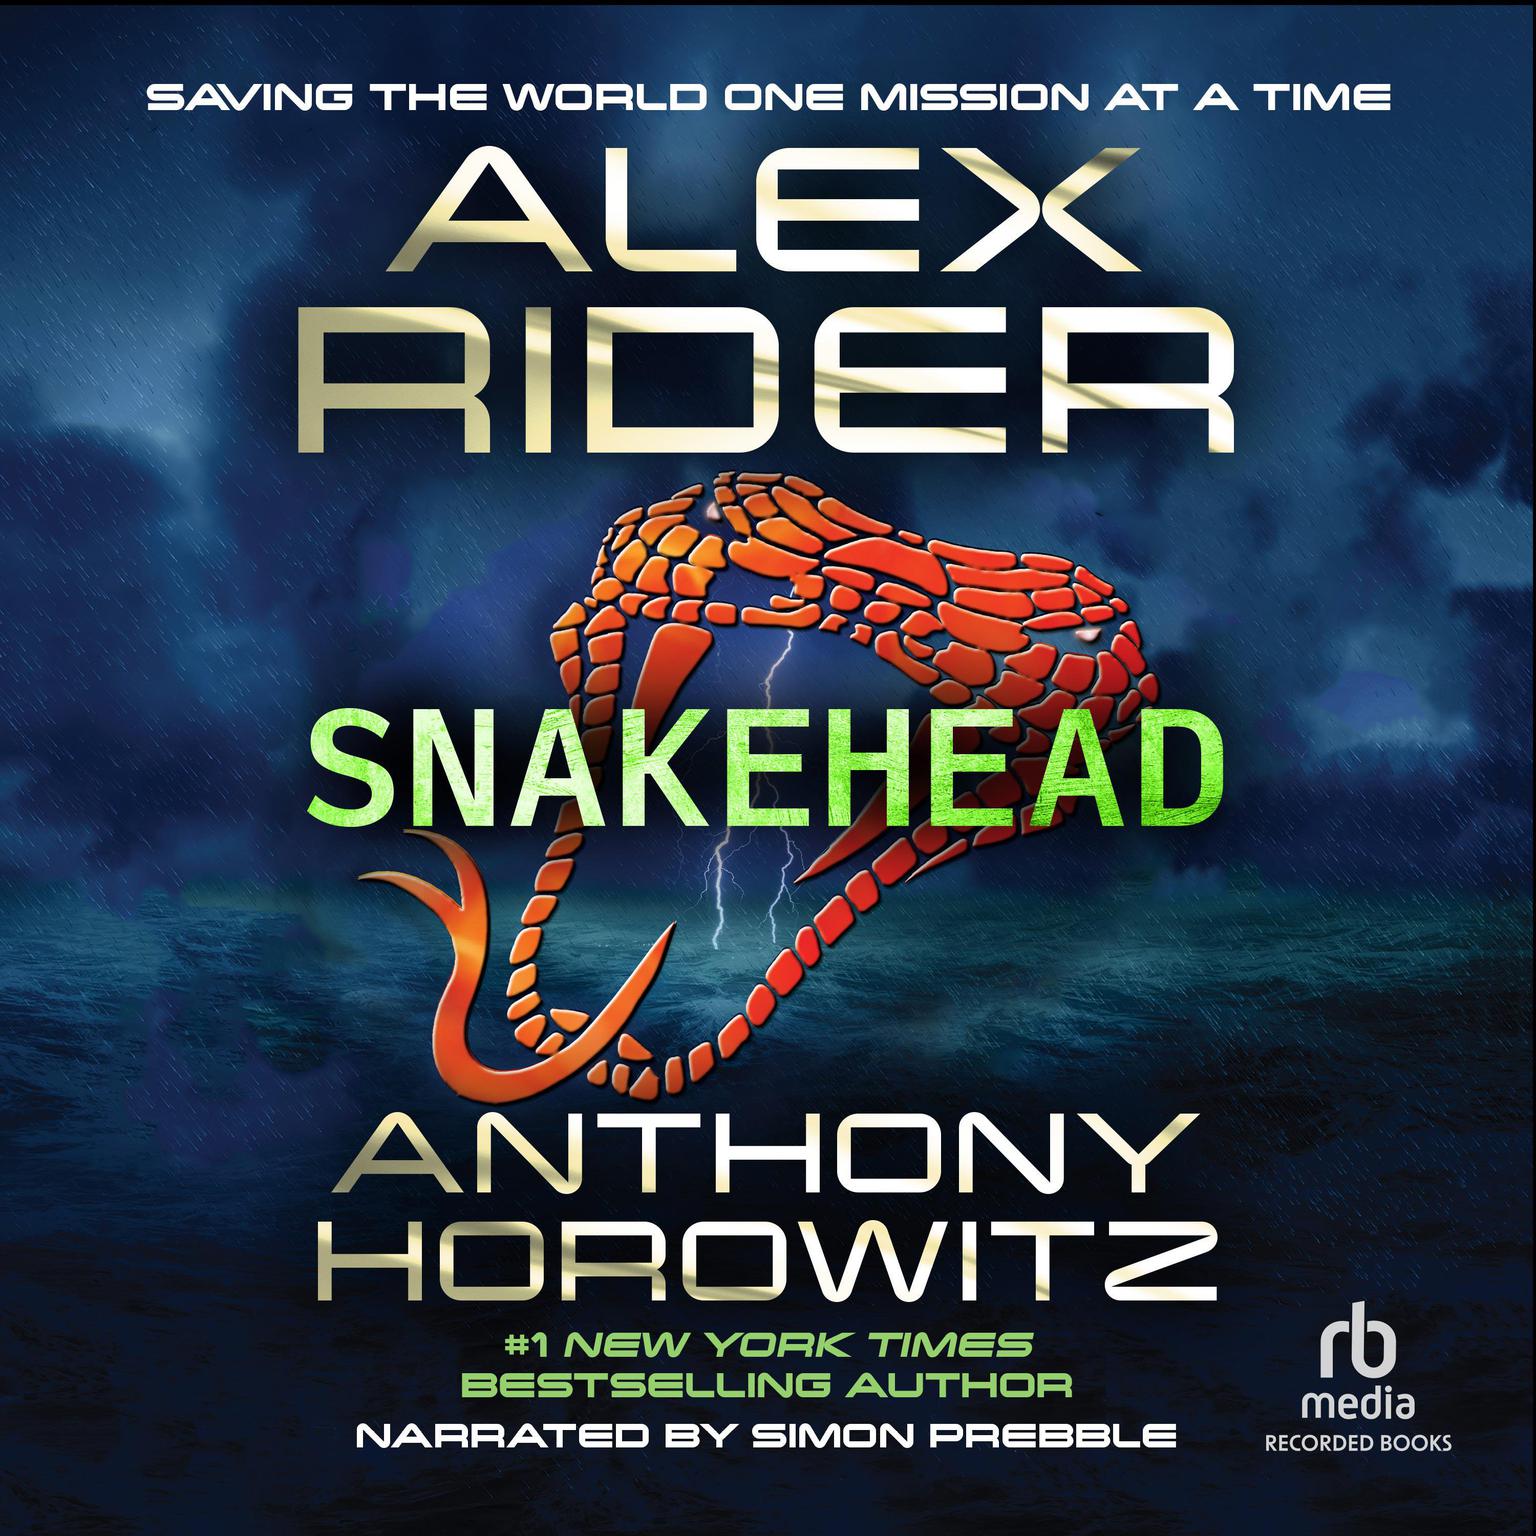 Snakehead Audiobook, by Anthony Horowitz